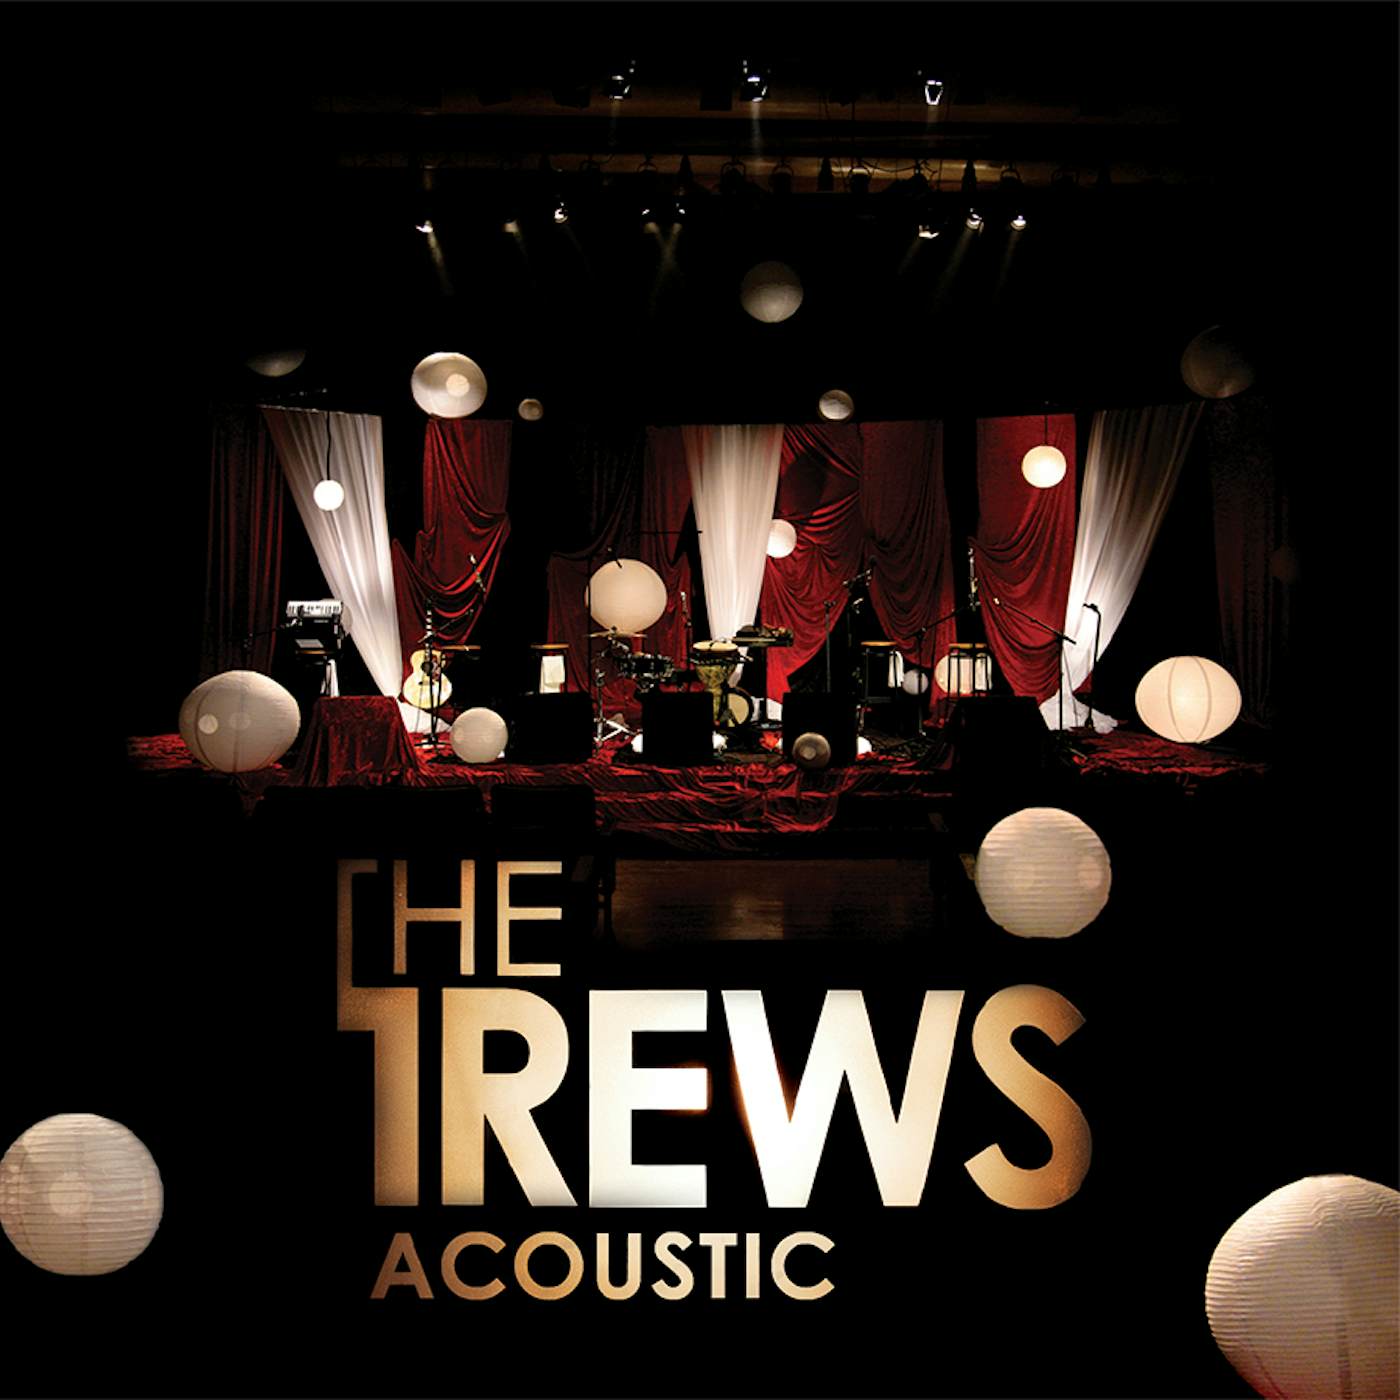 The Trews ACOUSTIC: FRIENDS & TOTAL STRANGERS CD